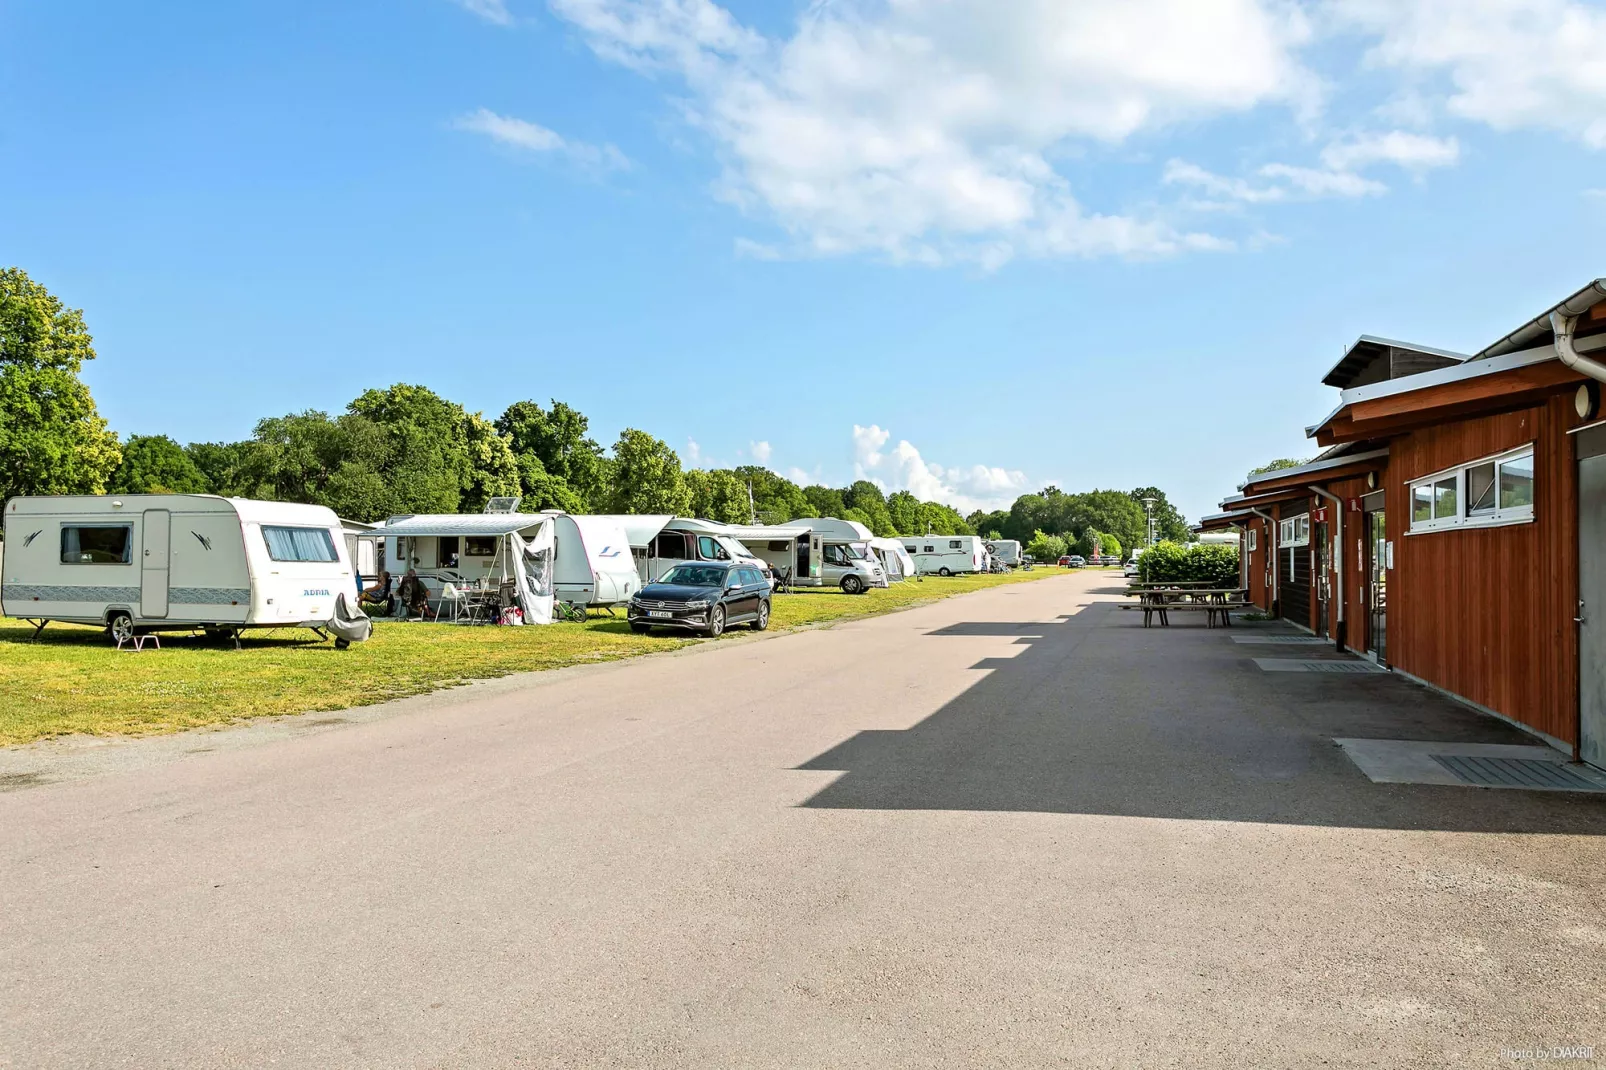 First Camp Västerås-Mälaren 